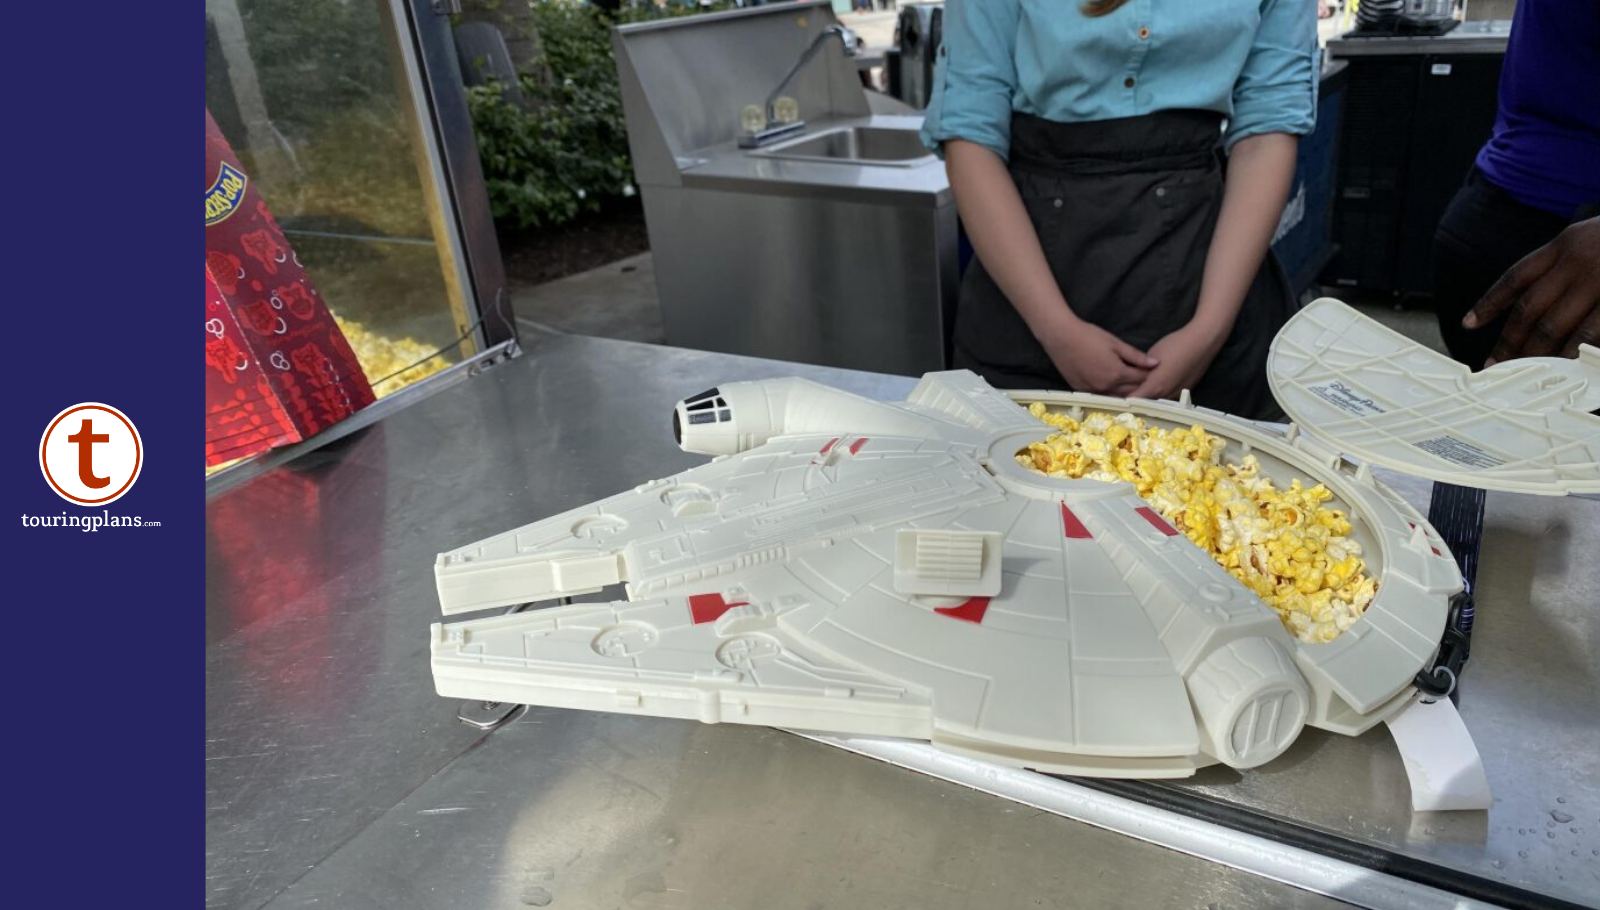 PHOTOS: Millennium Falcon Popcorn Bucket Lands at Walt Disney